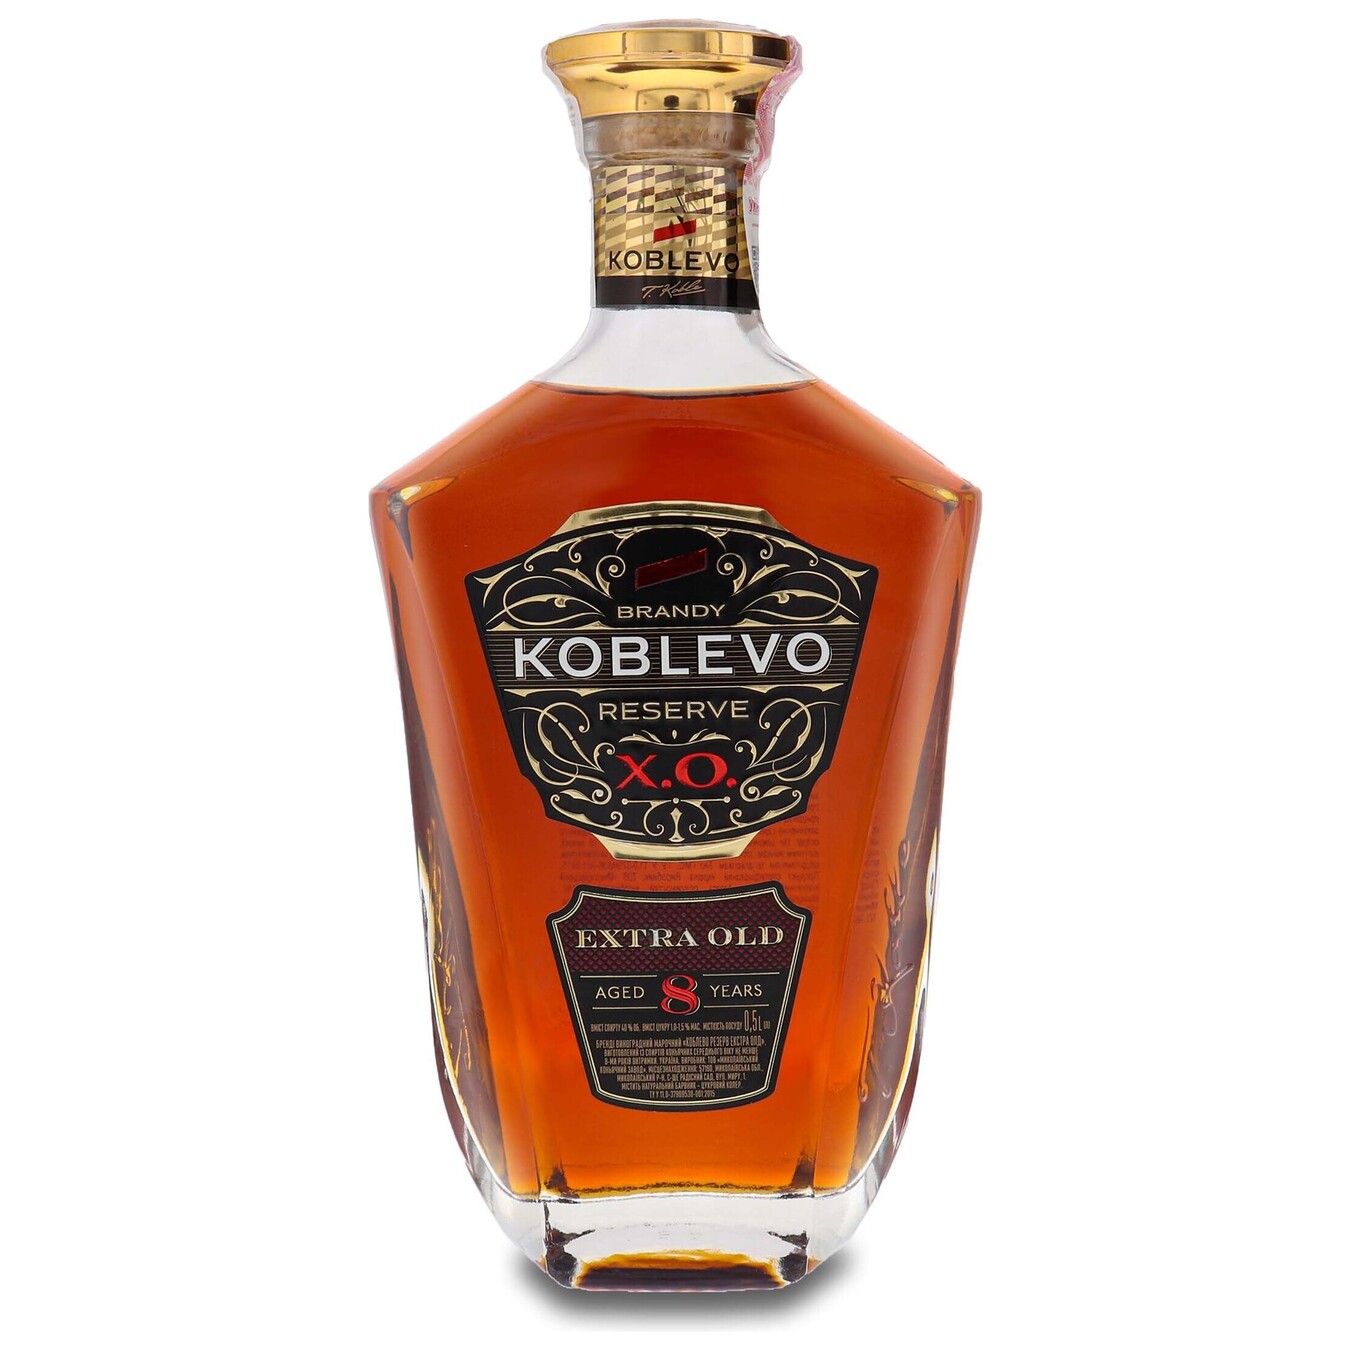 Koblevo Brandy Reserve Extra Old vintage 8 years 40% 0.5l